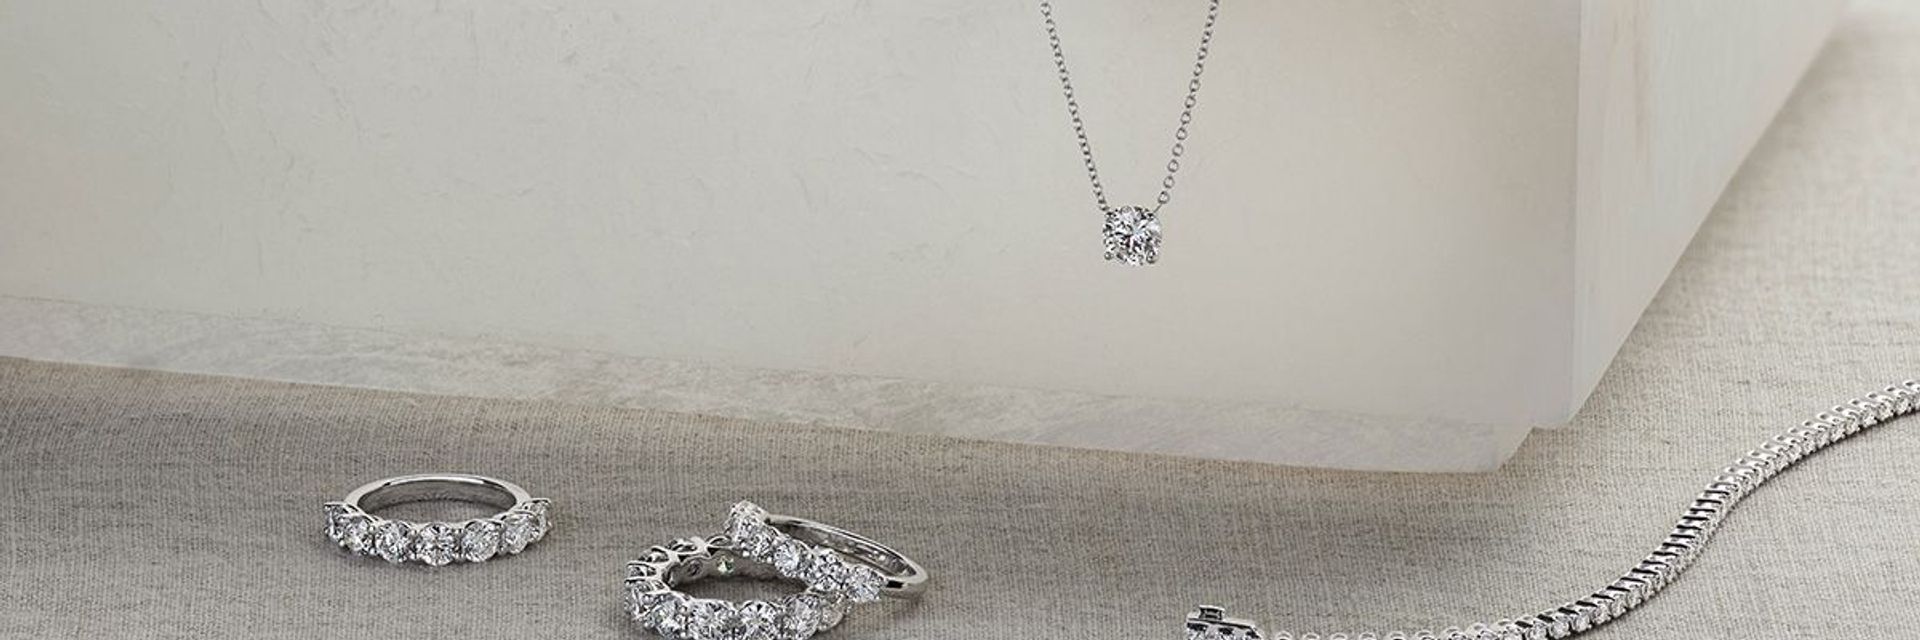 Diamond jewelry in 14k white gold.